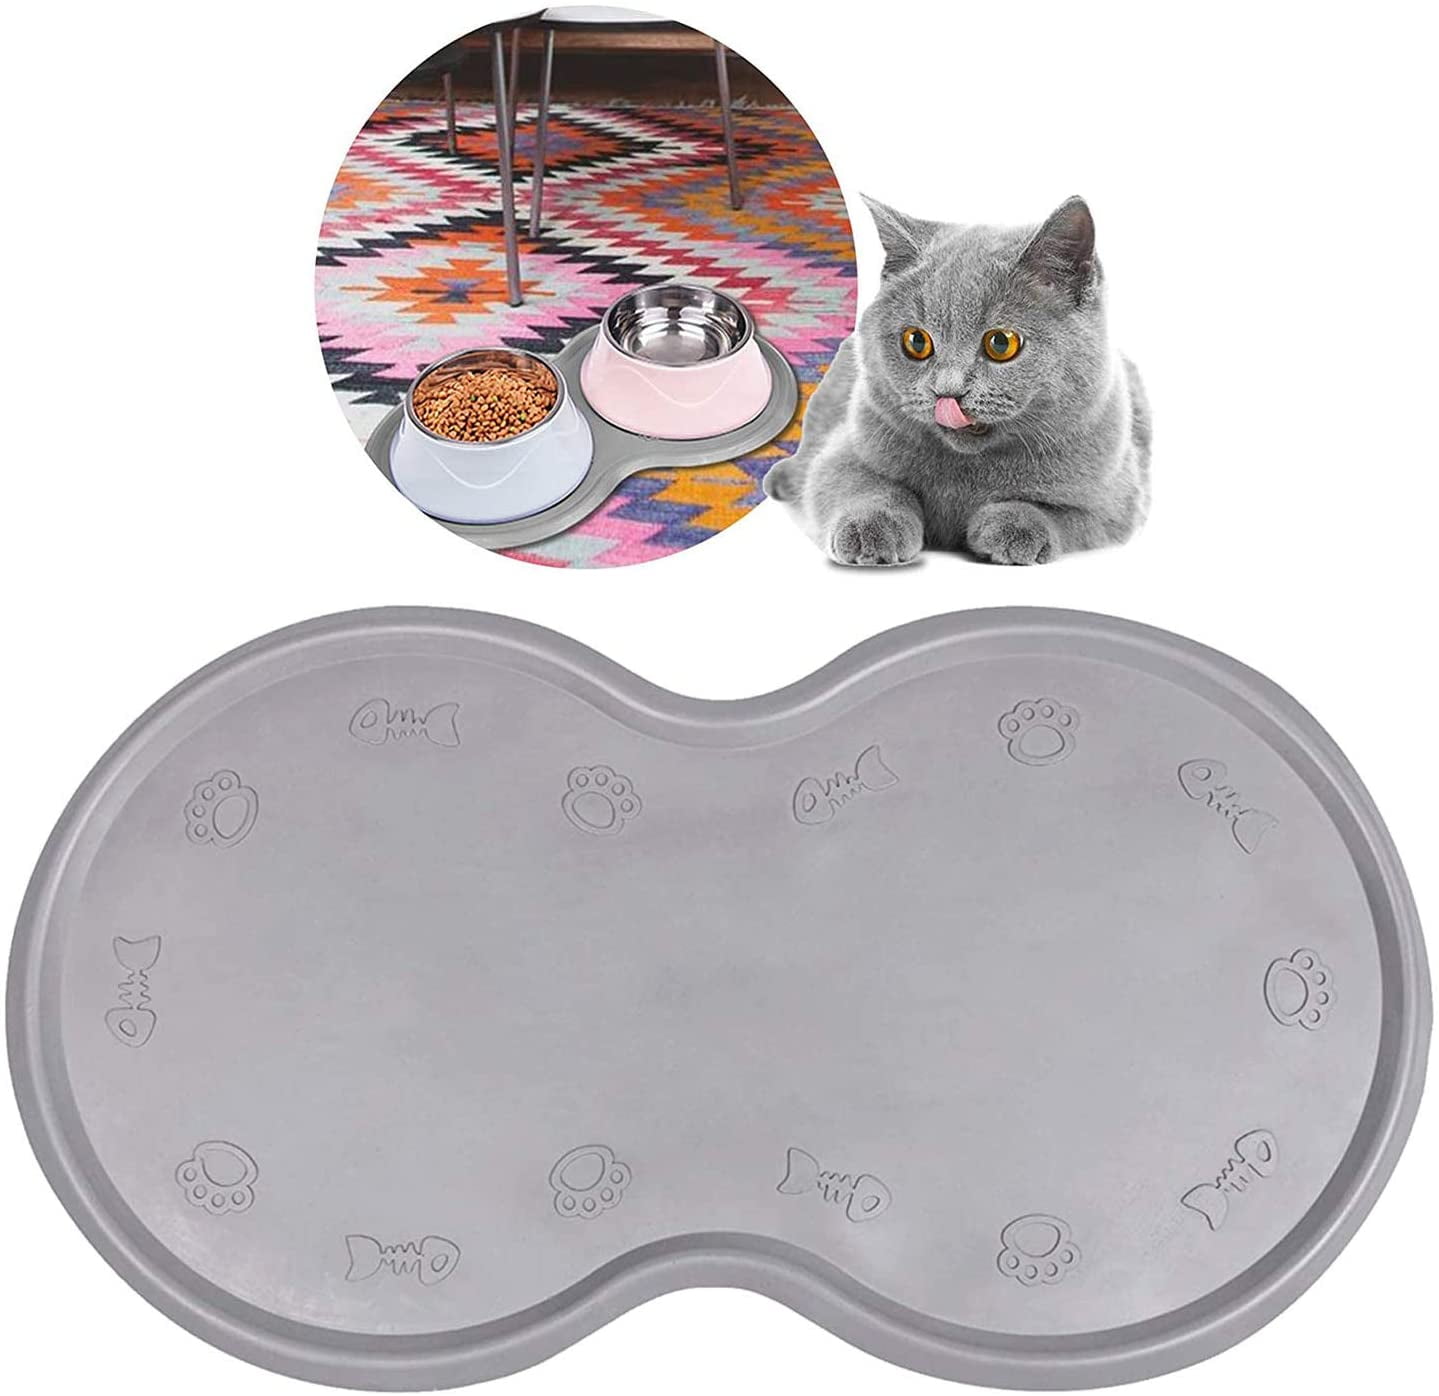 Reversible Cat Place Mat Cat Mat Cat Bowl Feeding Mat Feeding Station New Kitten Owner Gift Idea small